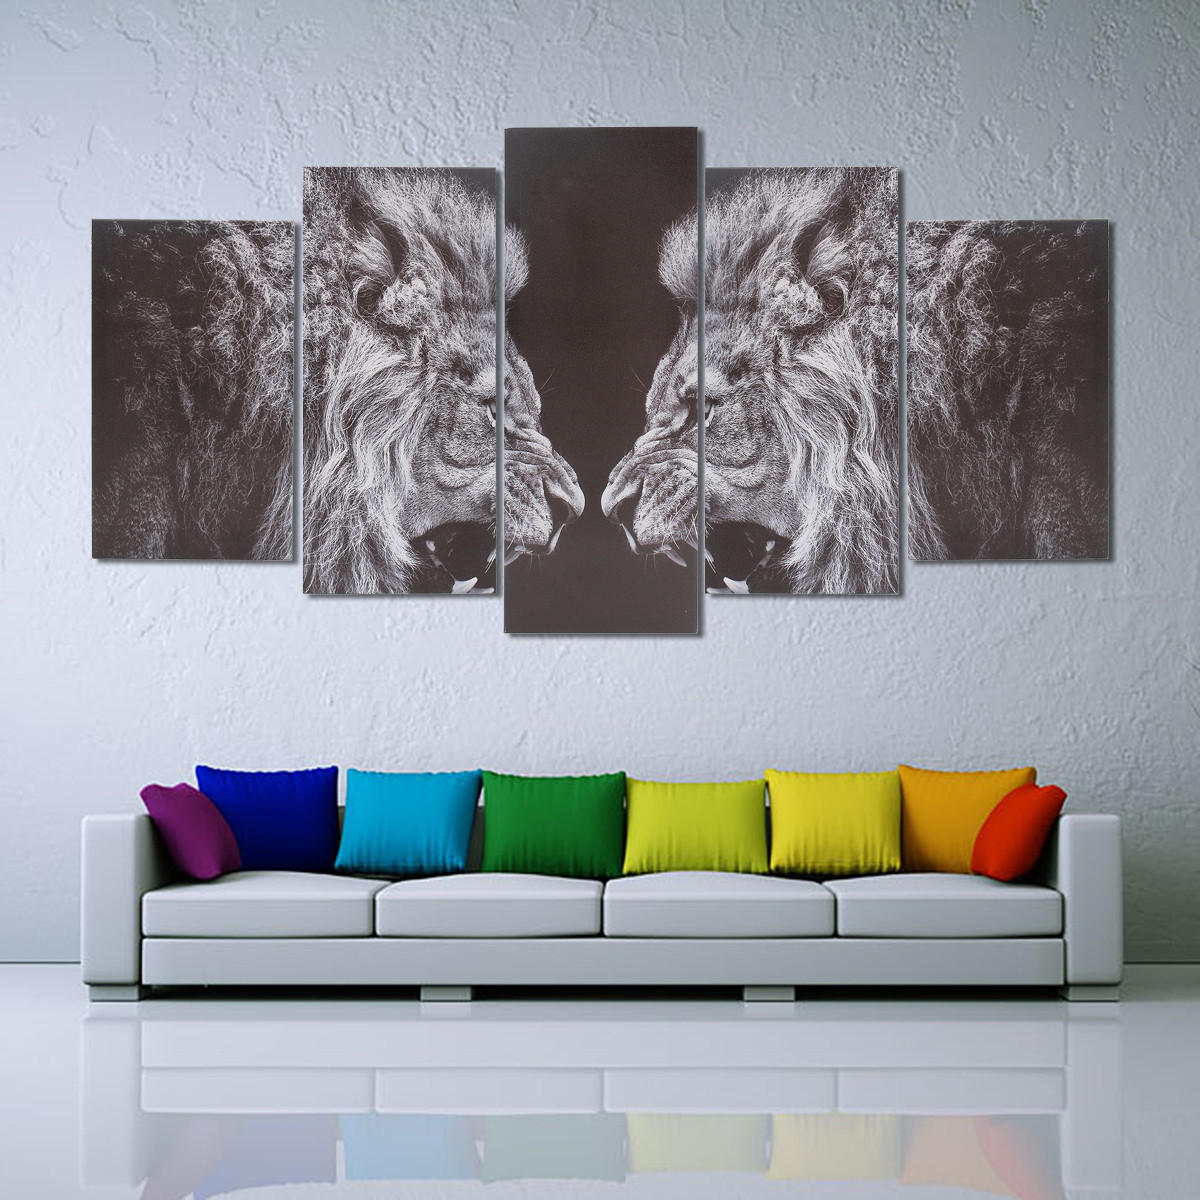 5Pcs Black White Lion Canvas Print Art Painting Wall Picture Home Decor Framed Decorations